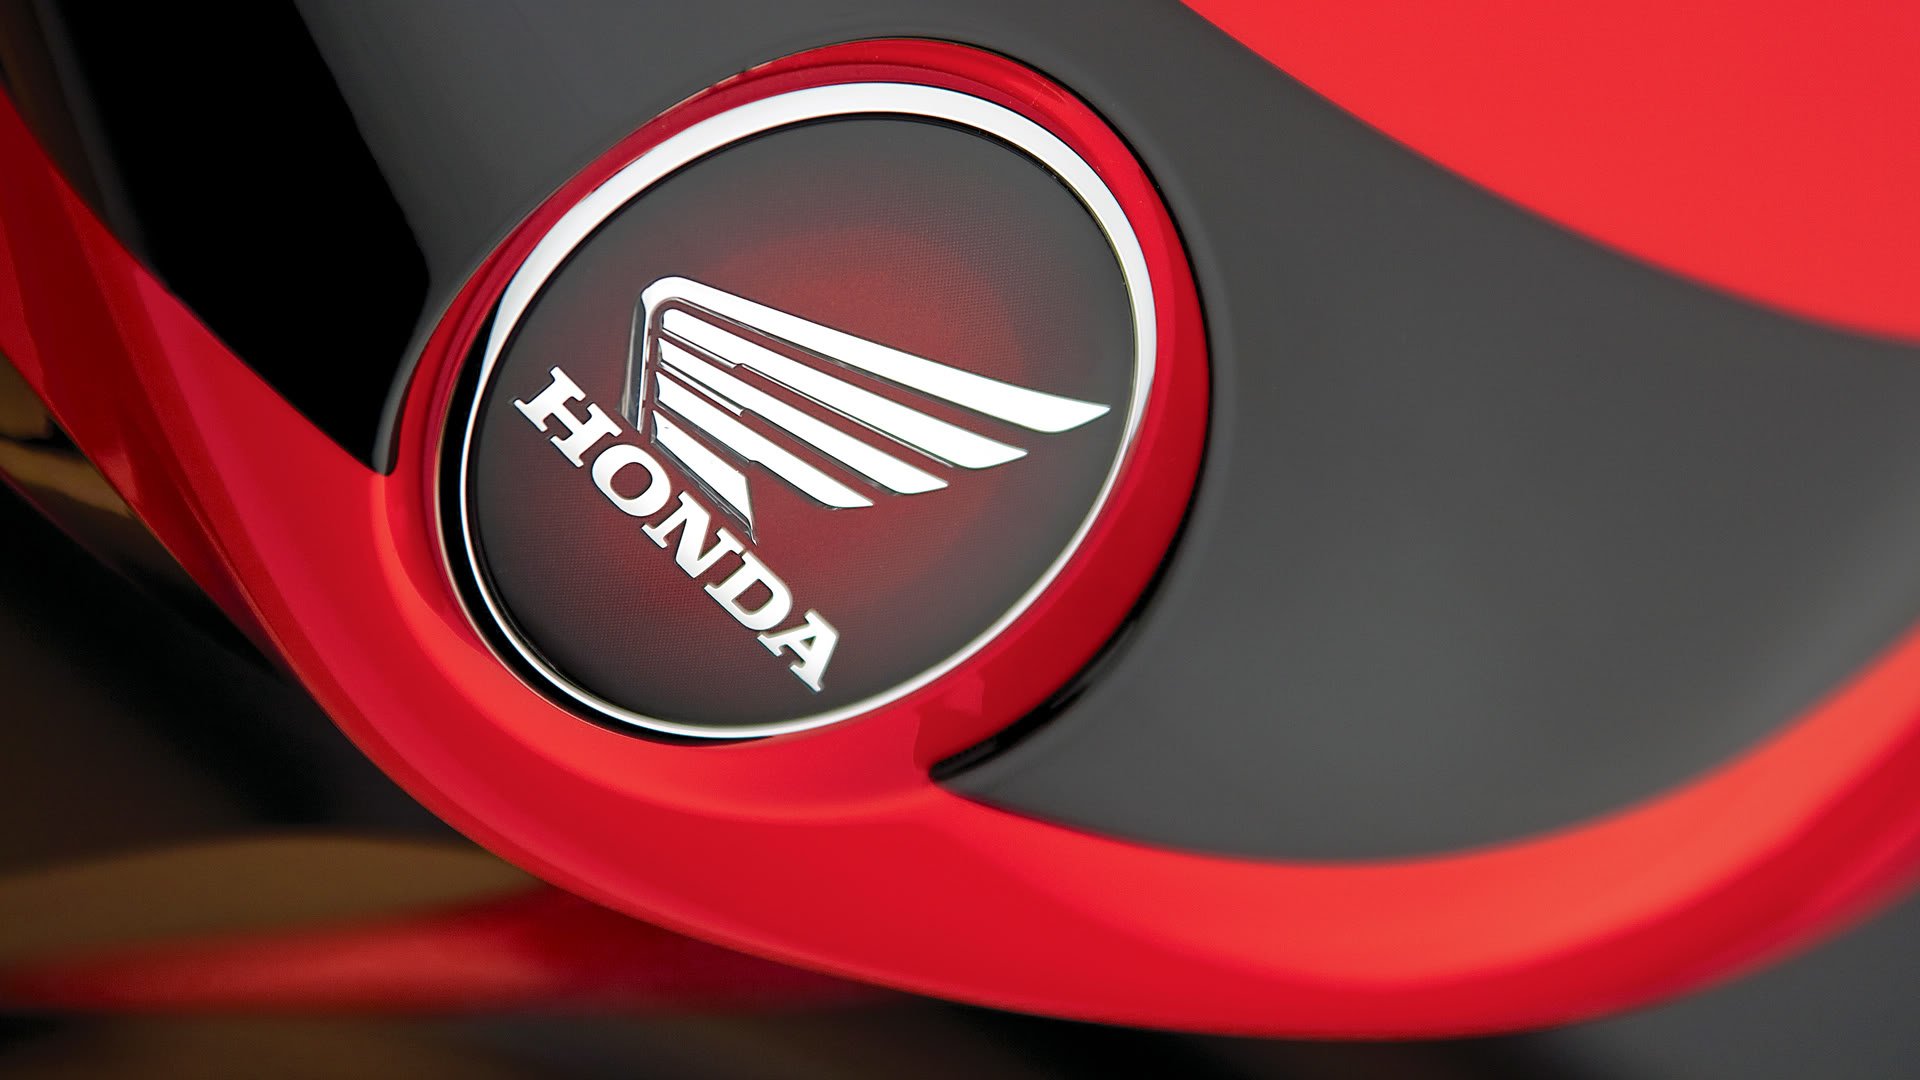 HD Honda Backgrounds Honda Wallpaper Images For Download